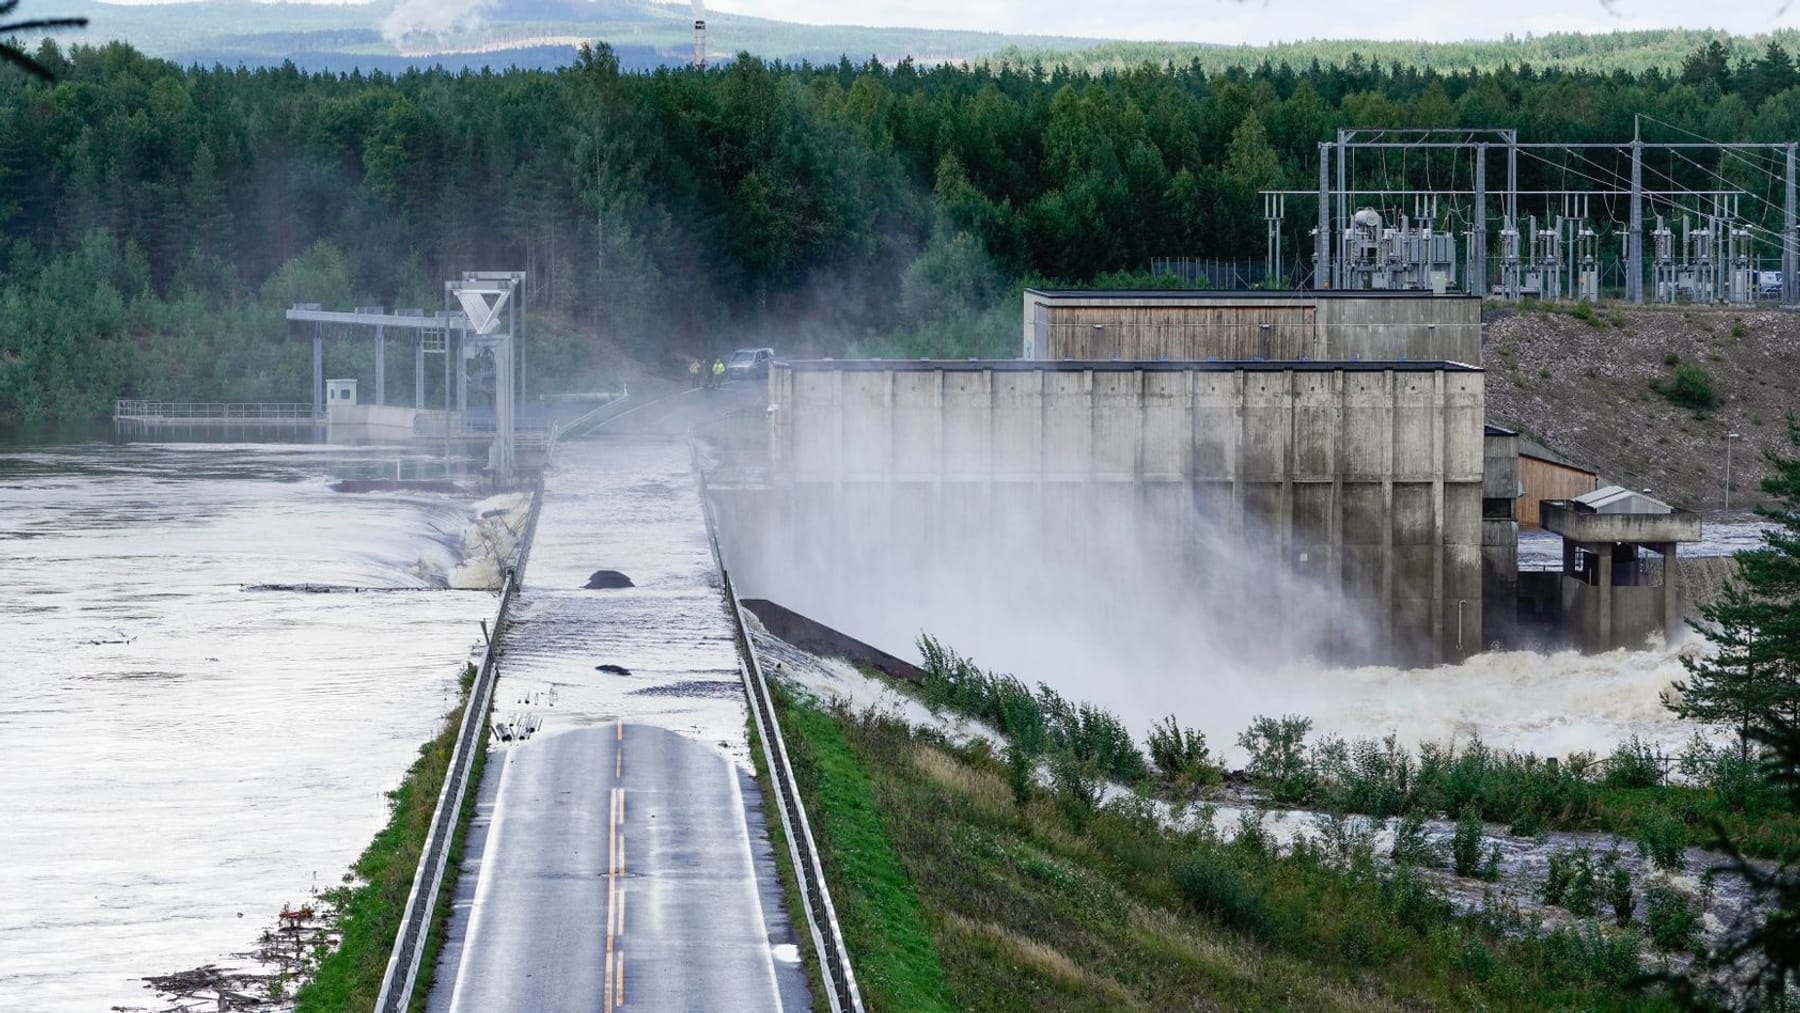 Storm i Norge: flom skader vannkraftverk